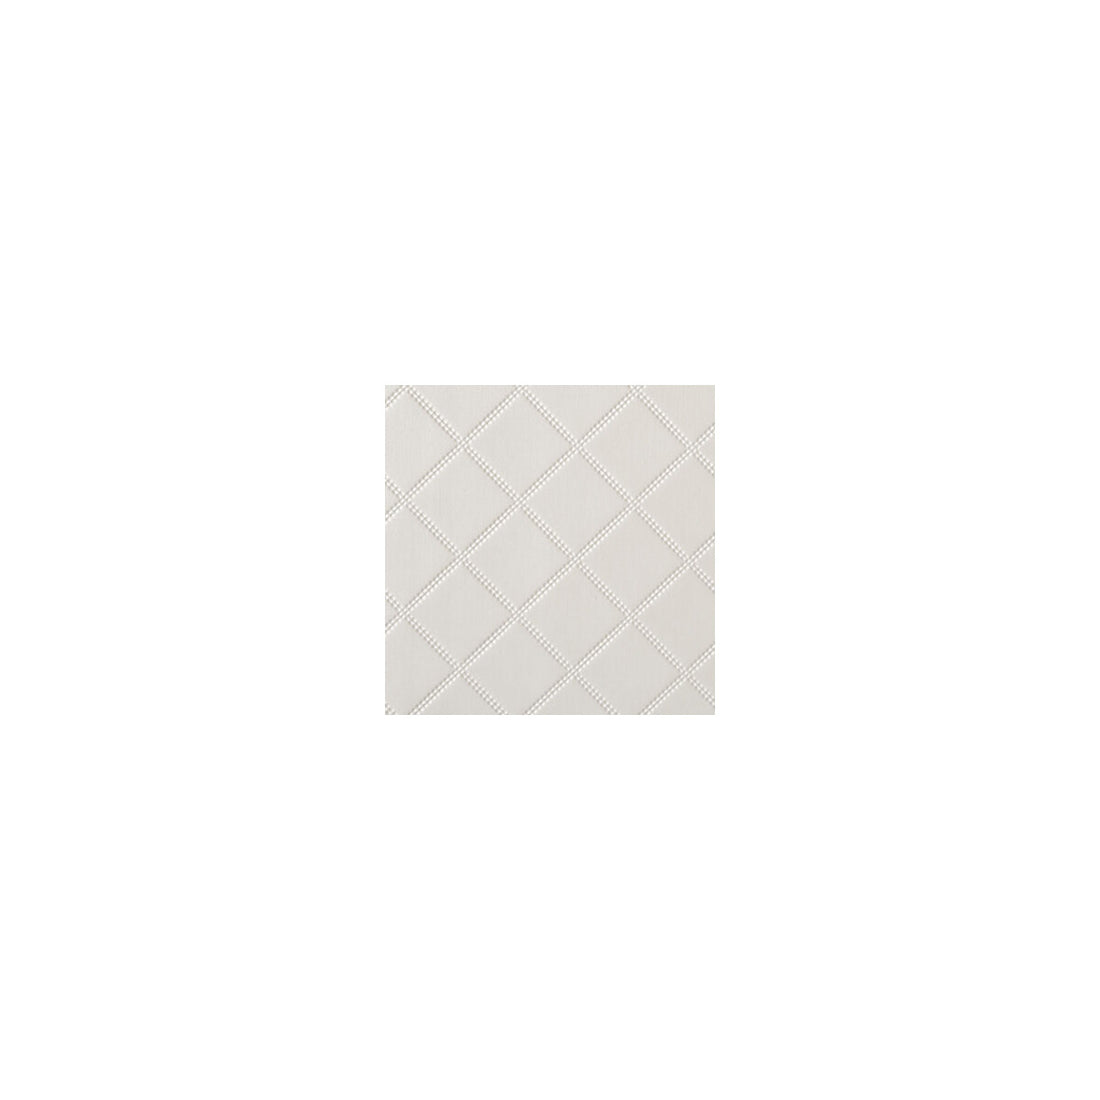 Bellinger fabric in white satin color - pattern BELLINGER.1.0 - by Kravet Design in the Performance Sta Kleen collection